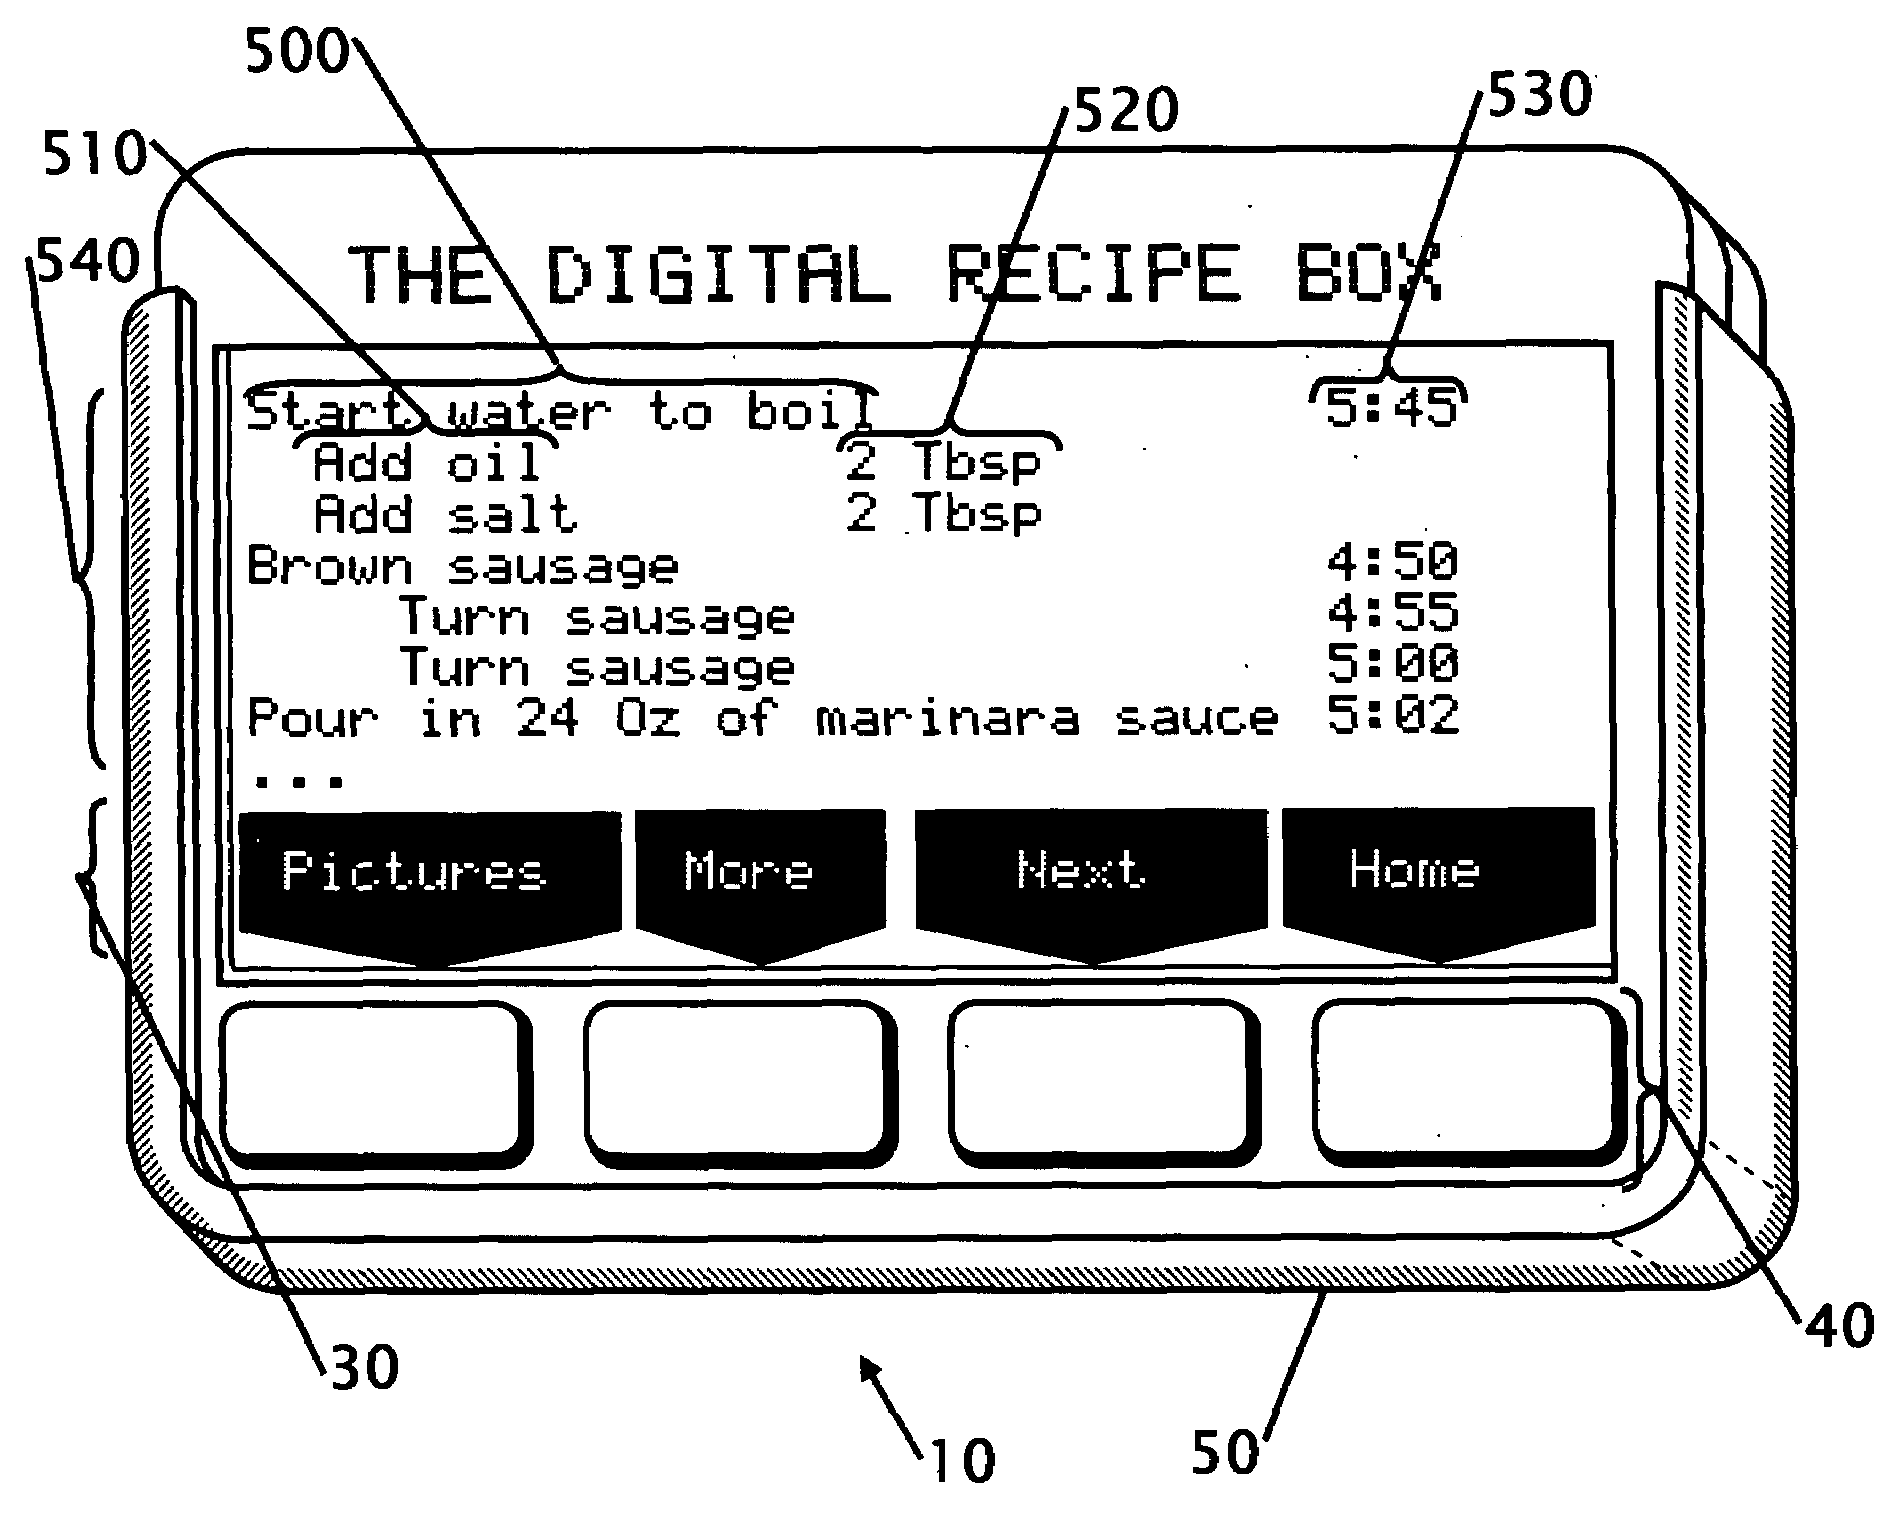 Digital recipe box